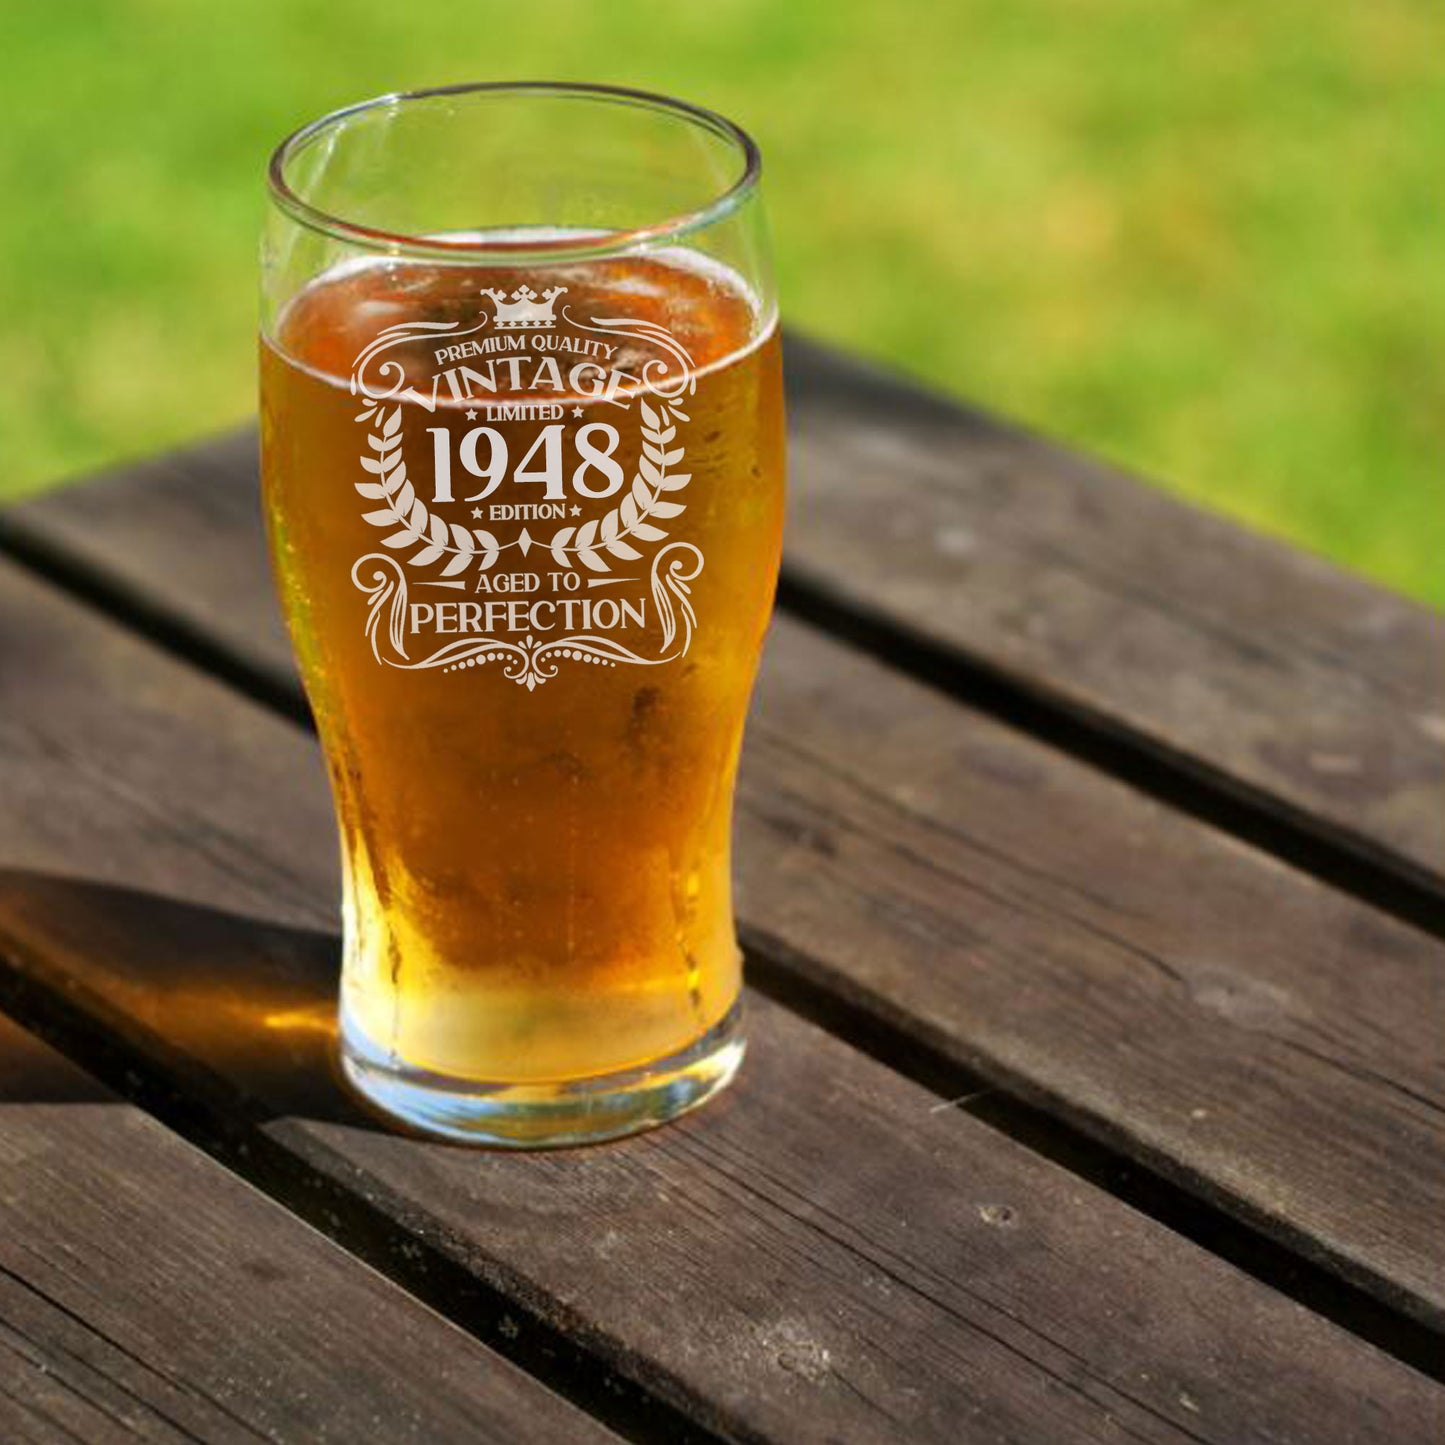 Vintage 1948 75th Birthday Engraved Beer Pint Glass Gift  - Always Looking Good -   